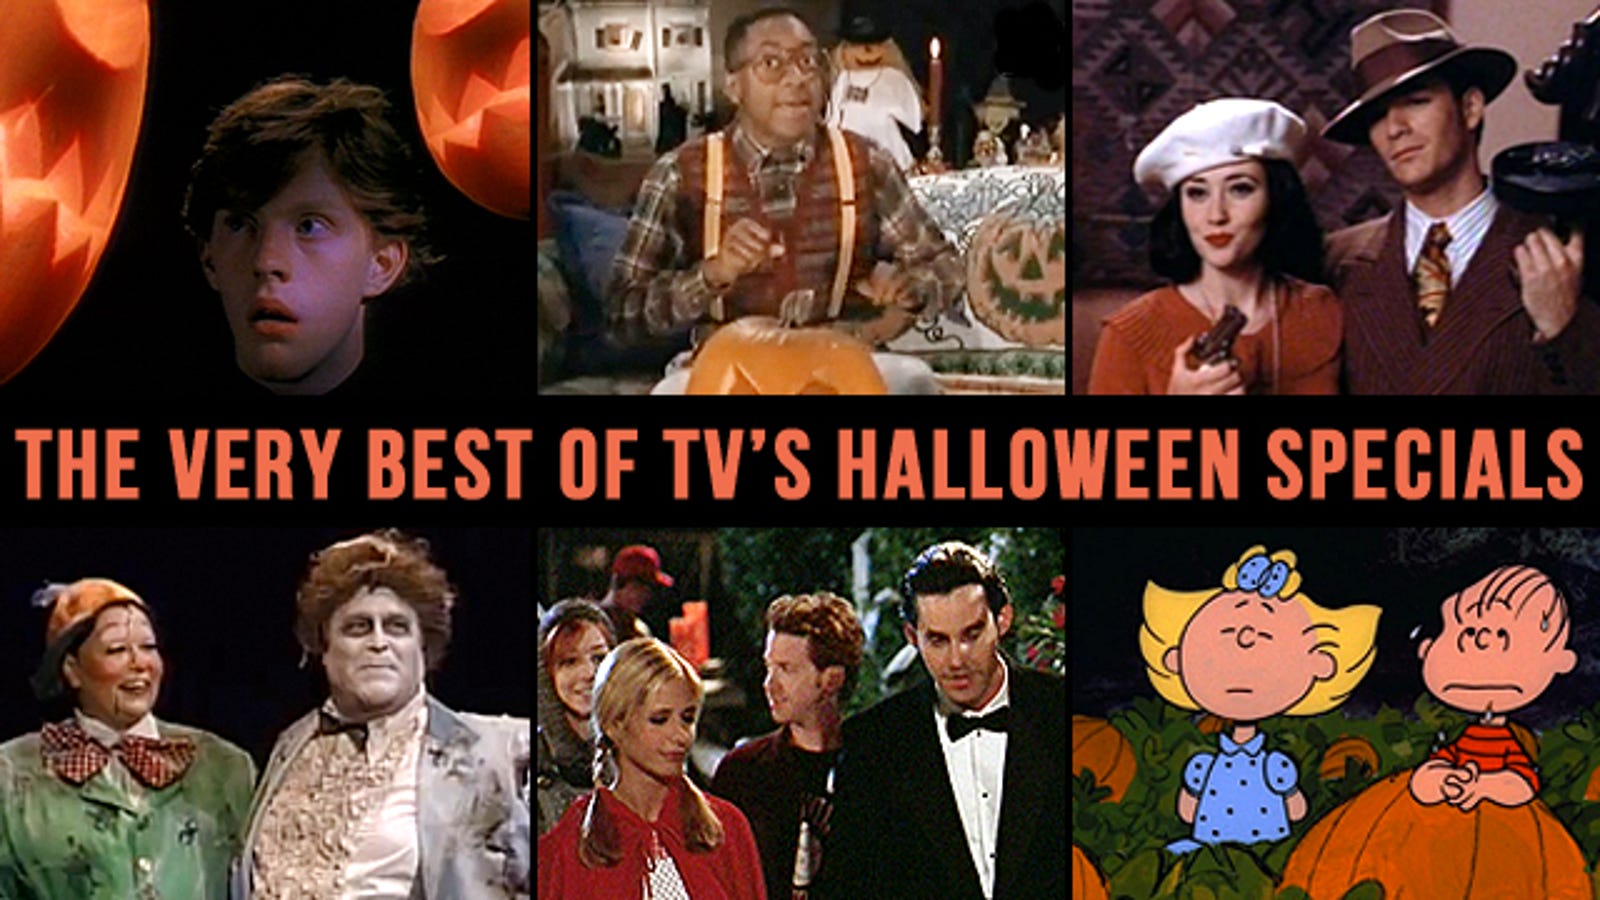 Love halloween?here are 10 top halloween themed slot machines